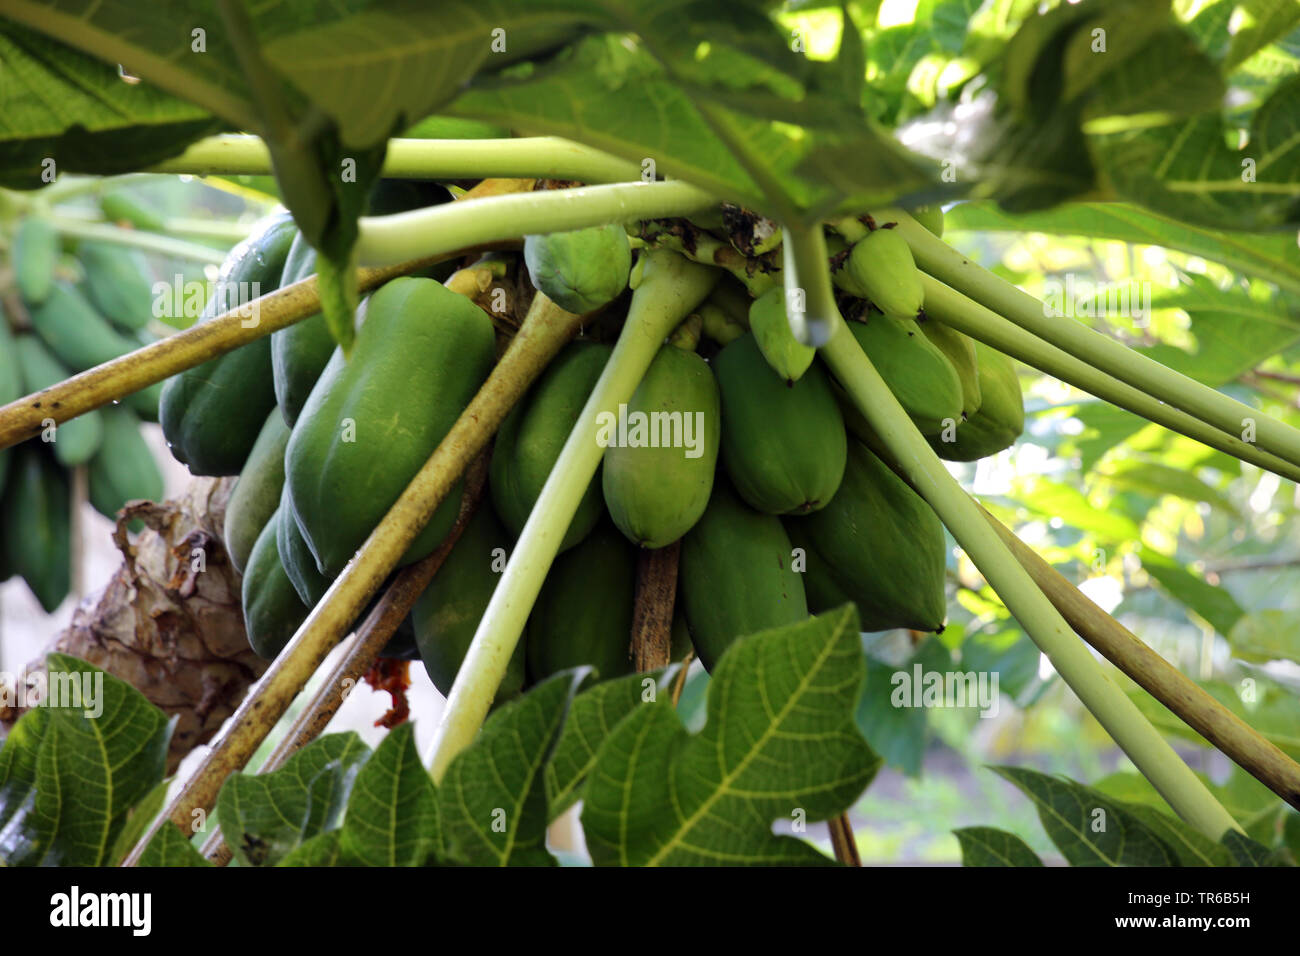 papaya, papaw, paw paw, mamao, tree melon (Carica papaya), immature fruits on a tree, Philippines Stock Photo